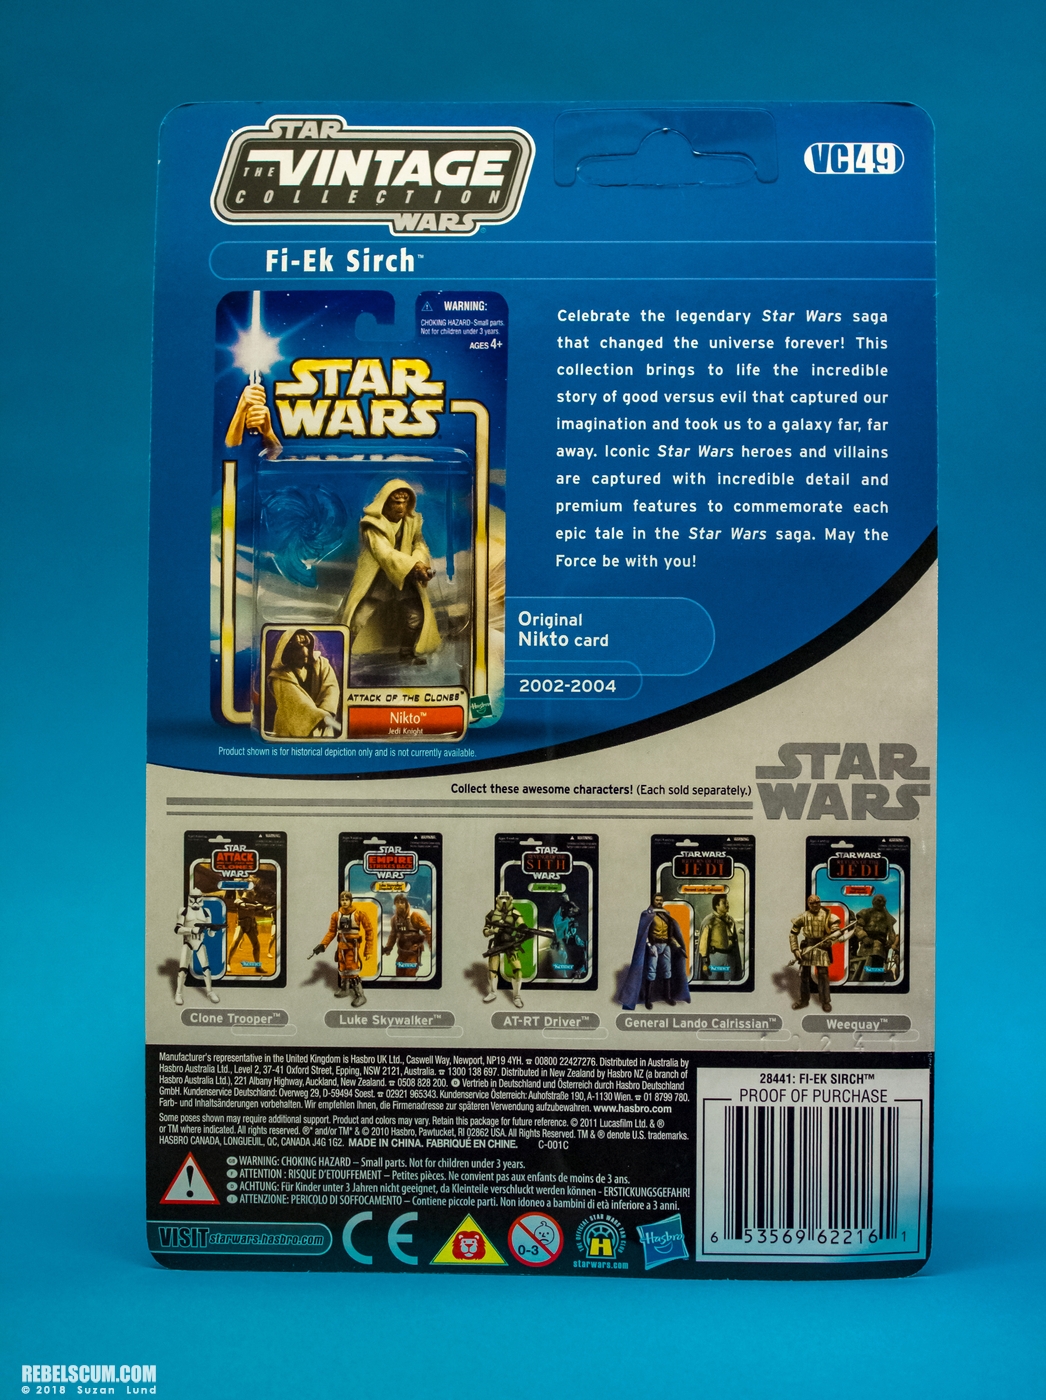 VC49-Fi-Ek-Sirch-The-Vintage-Collection-Star-Wars-Hasbro-020.jpg